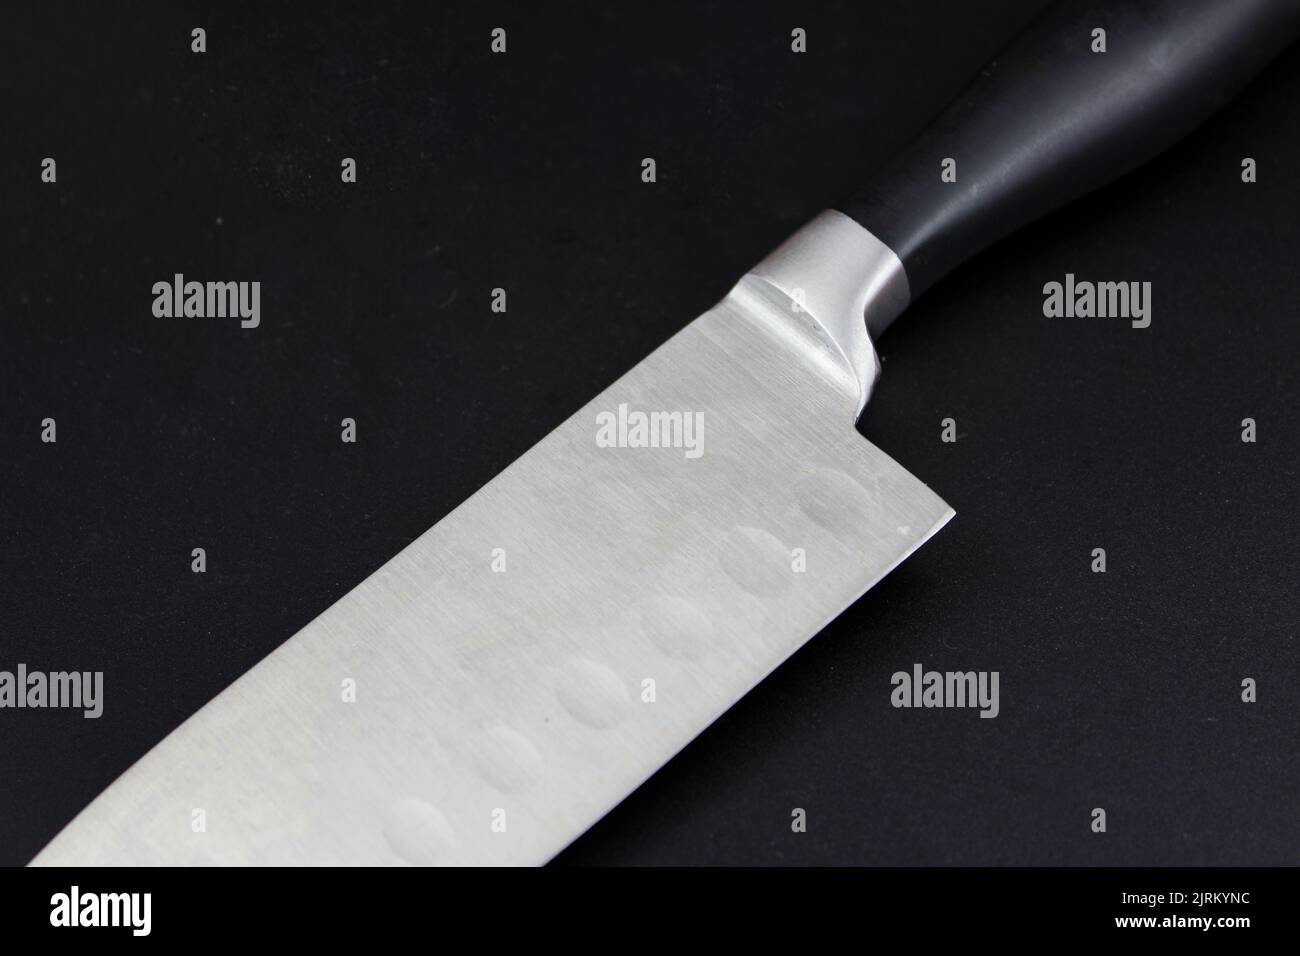 Knife edge, Big kitchen knife with black plastic handle on black background Stock Photo